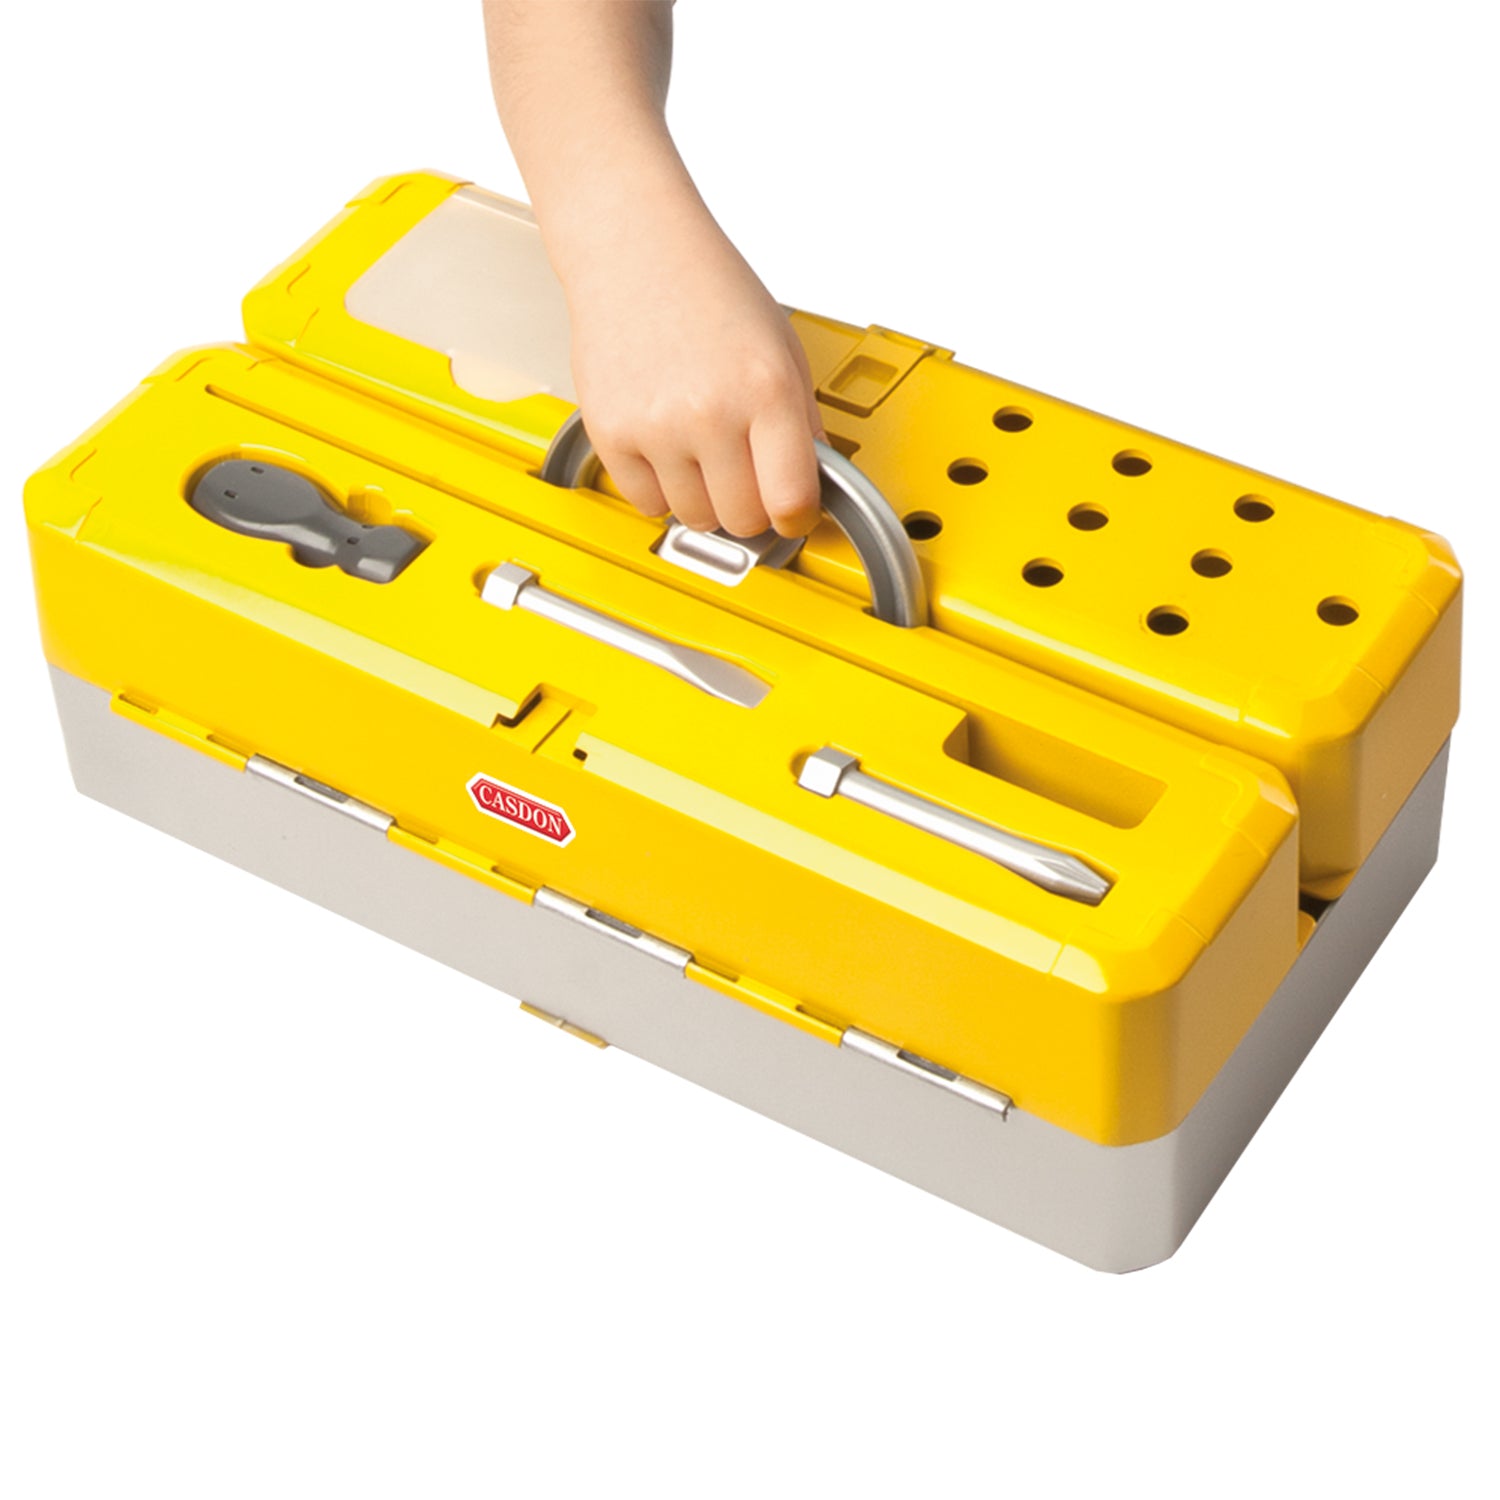 Casdon - Tool Box Work Bench Toy